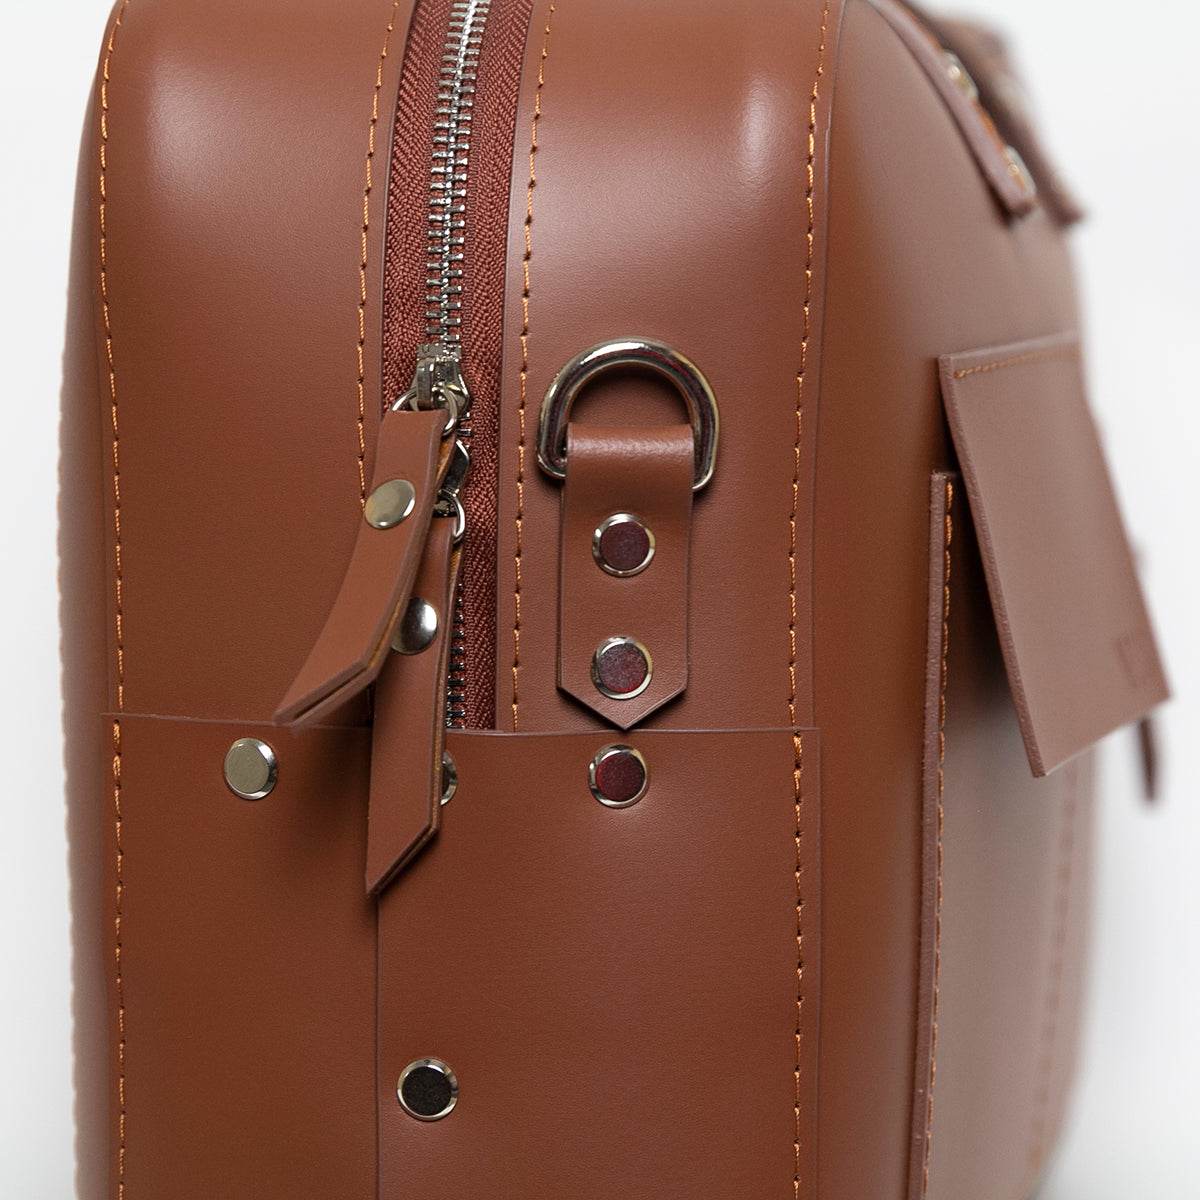 VIS Leather Bag - Unisex